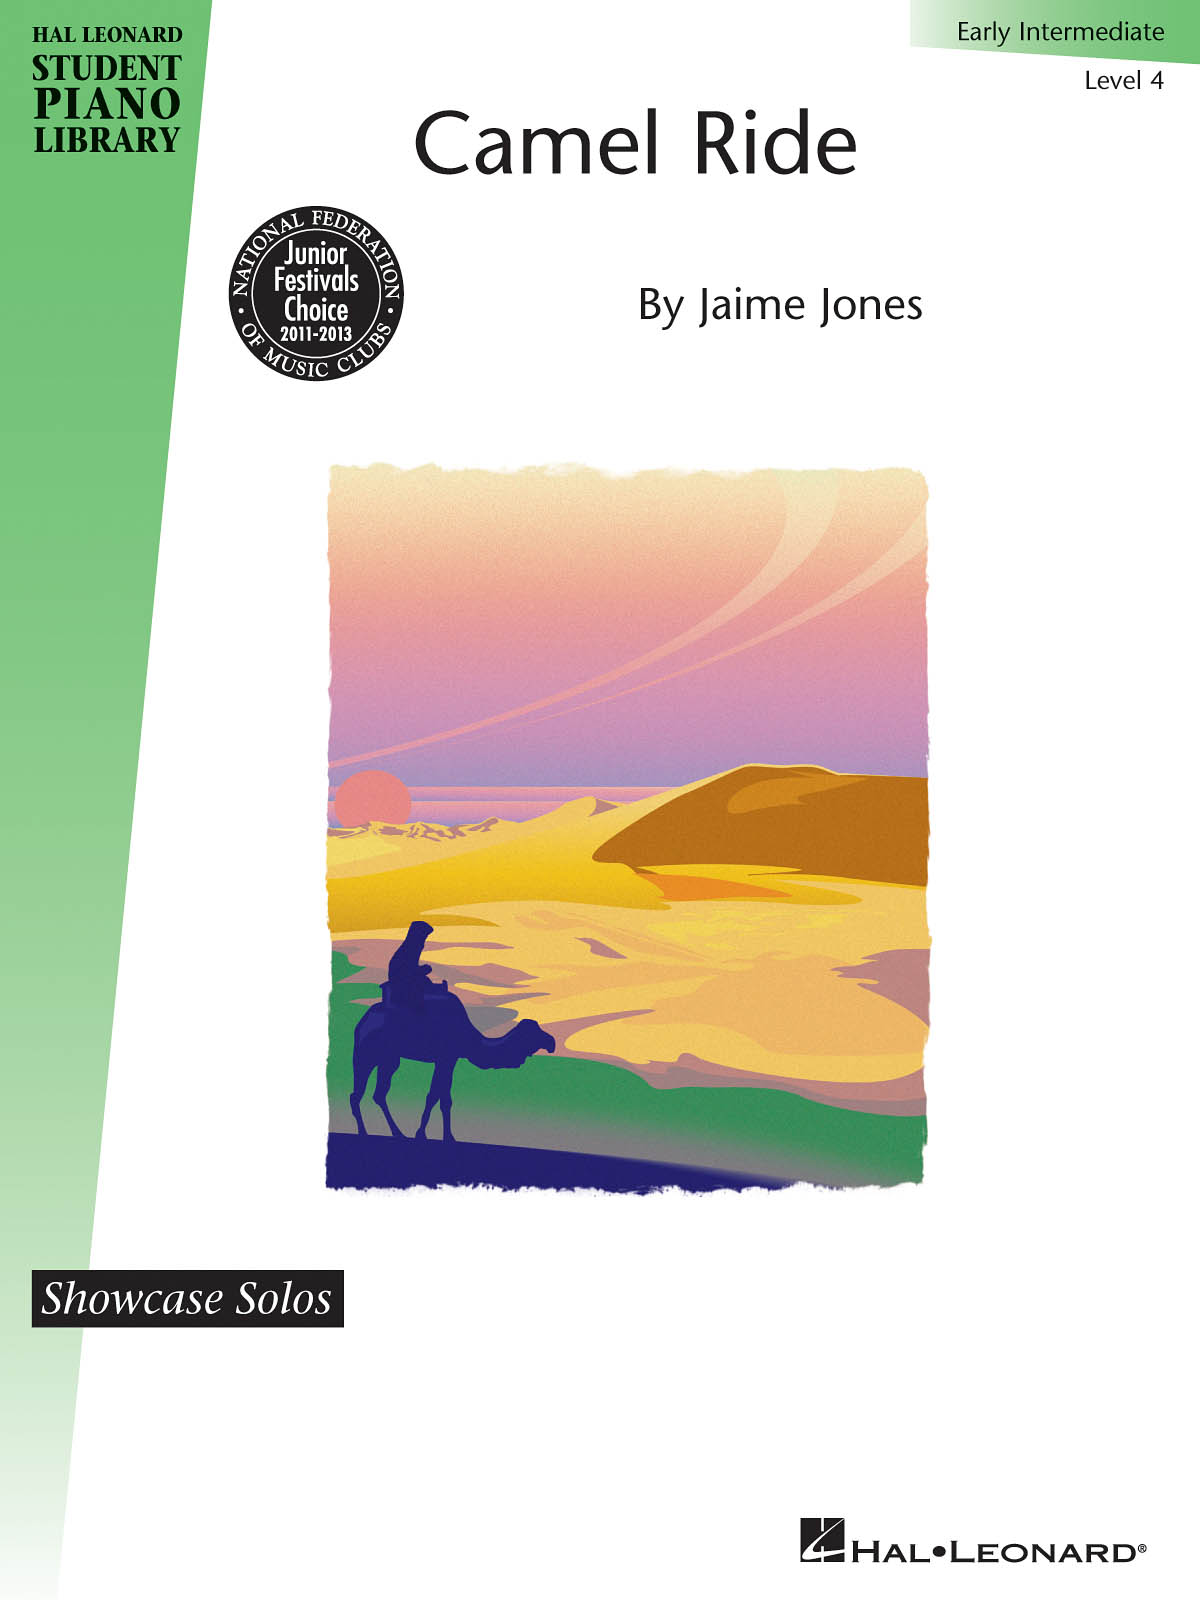 Camel Ride(Hal Leonard Student Piano Library Showcase Solo Level 4 Early Intermediate)